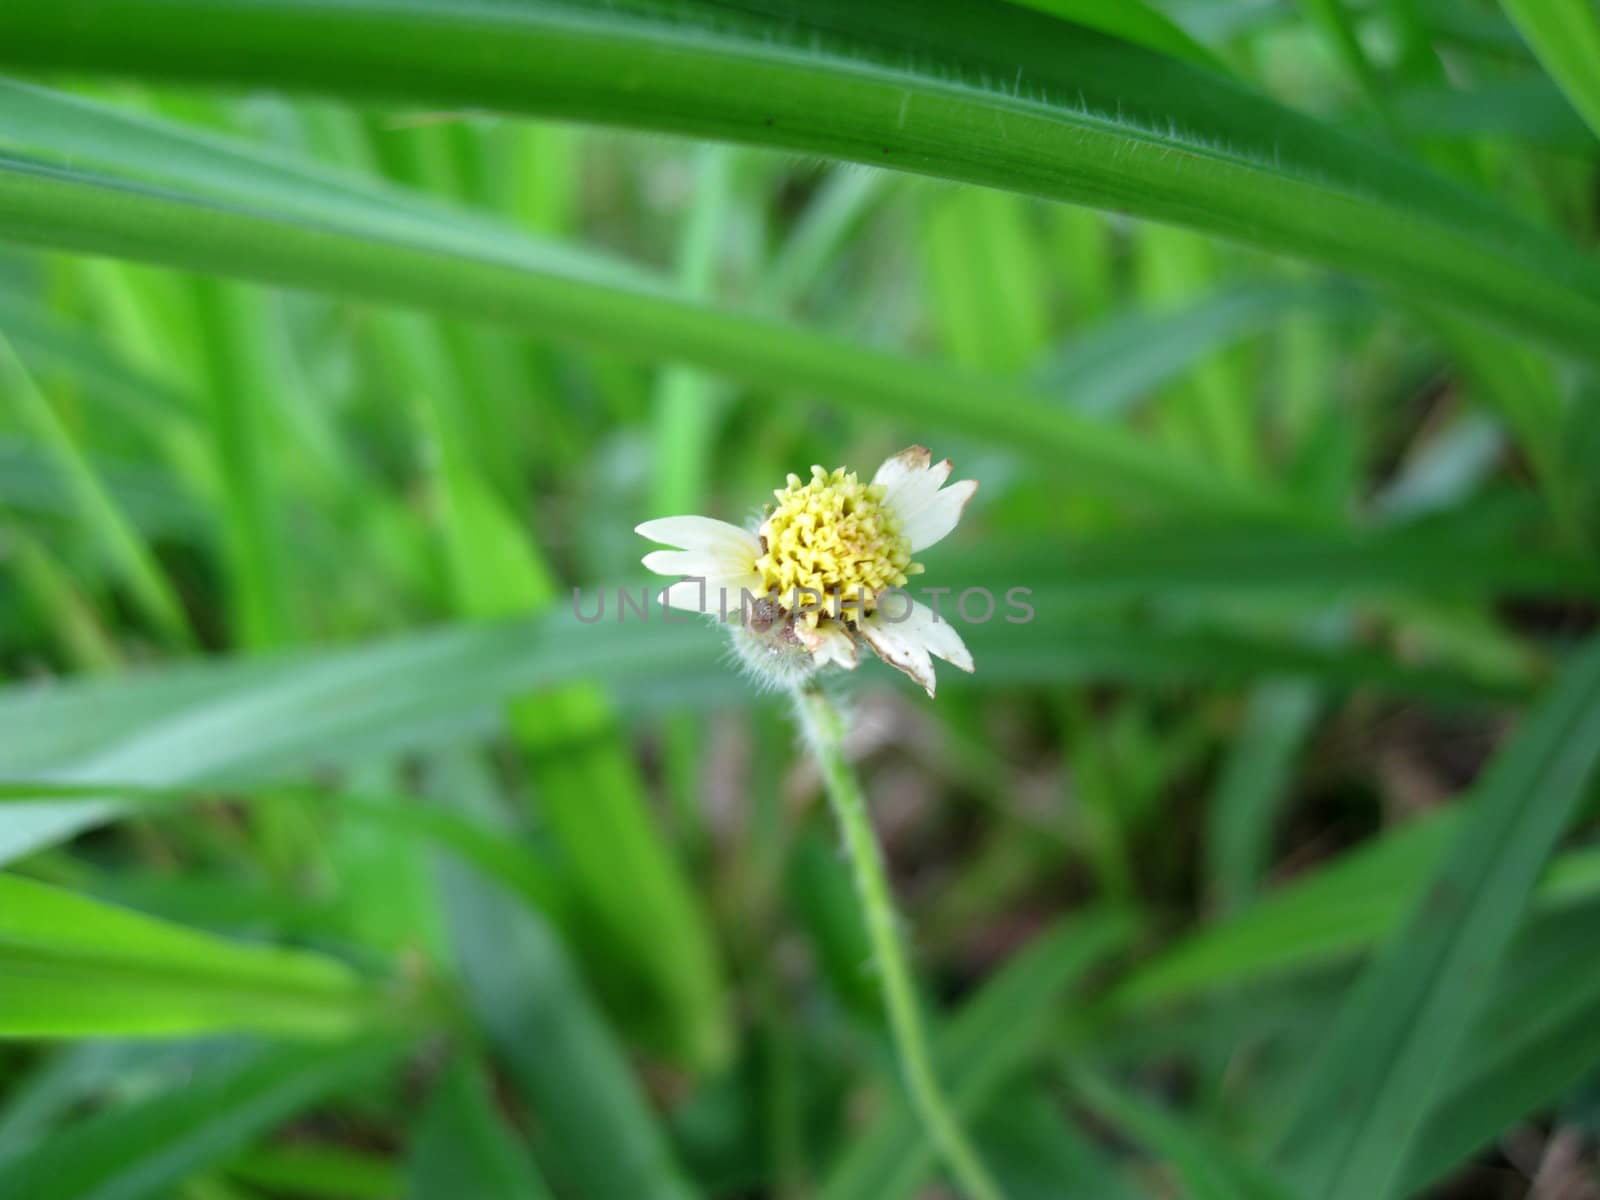 a small dandelion growing in a bush